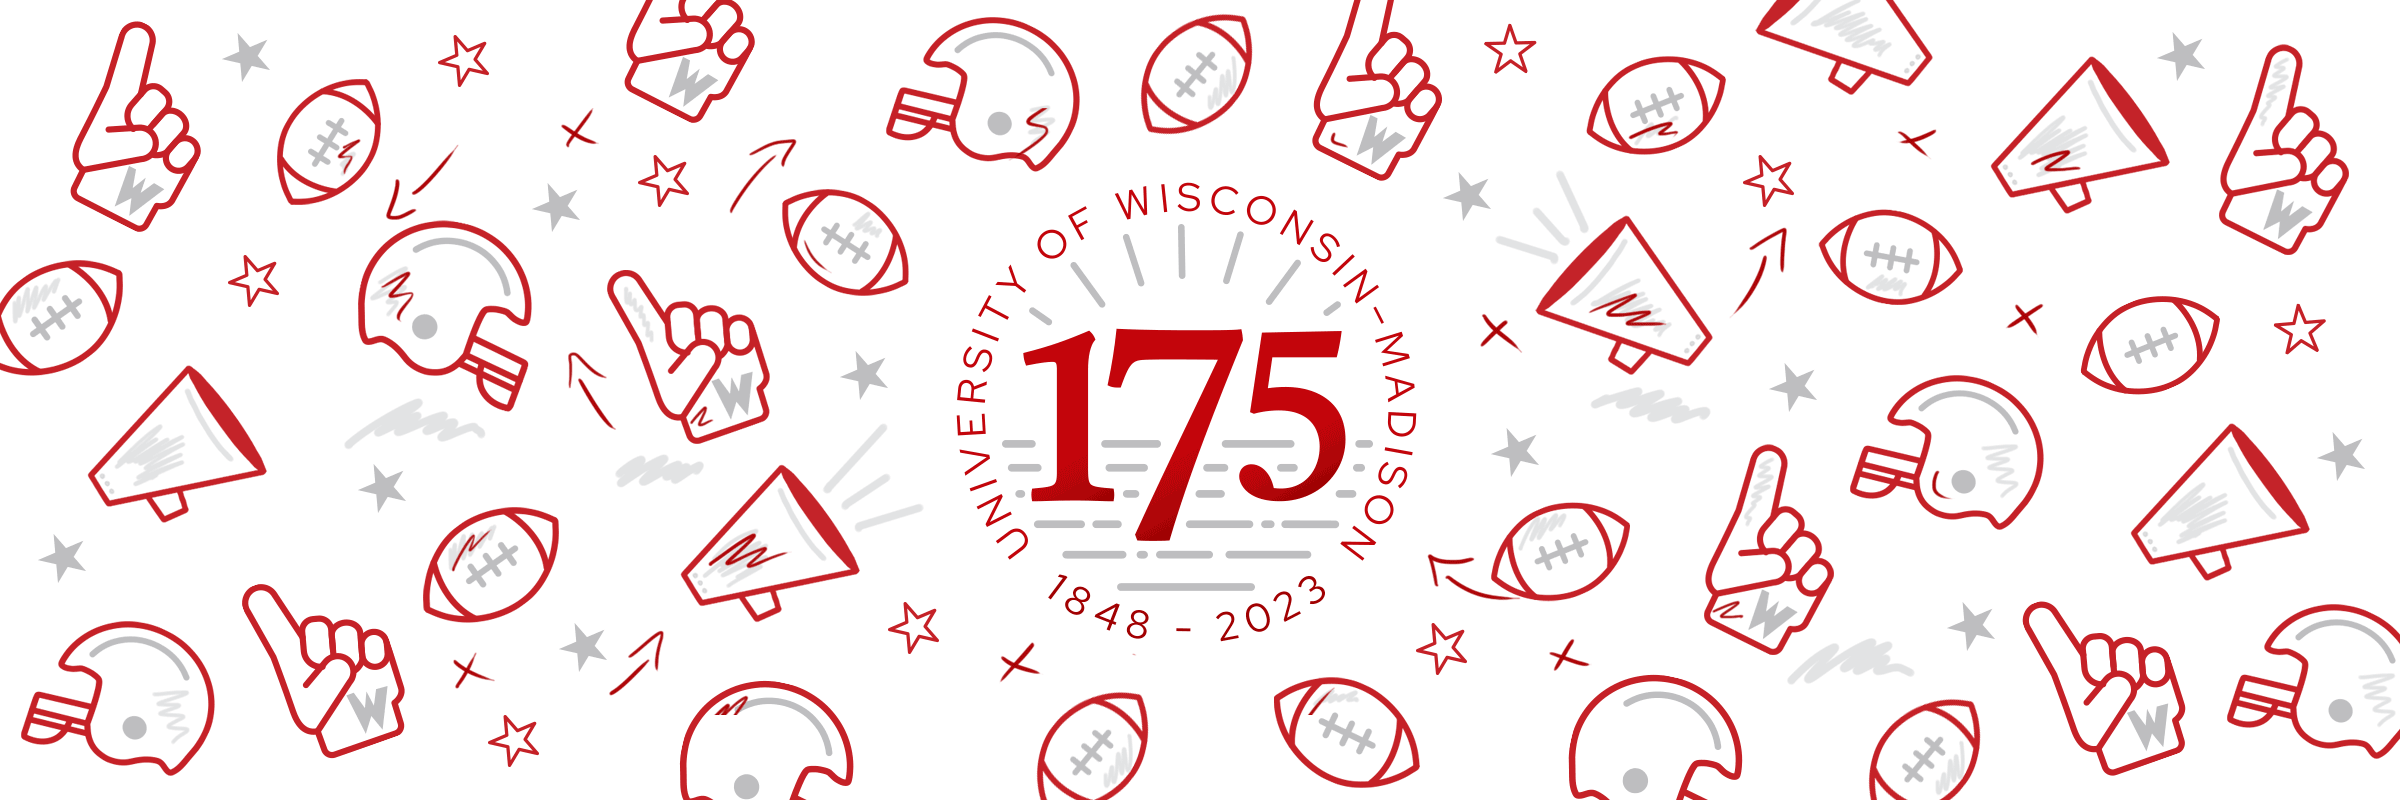 University of Wisconsin 175 logo.